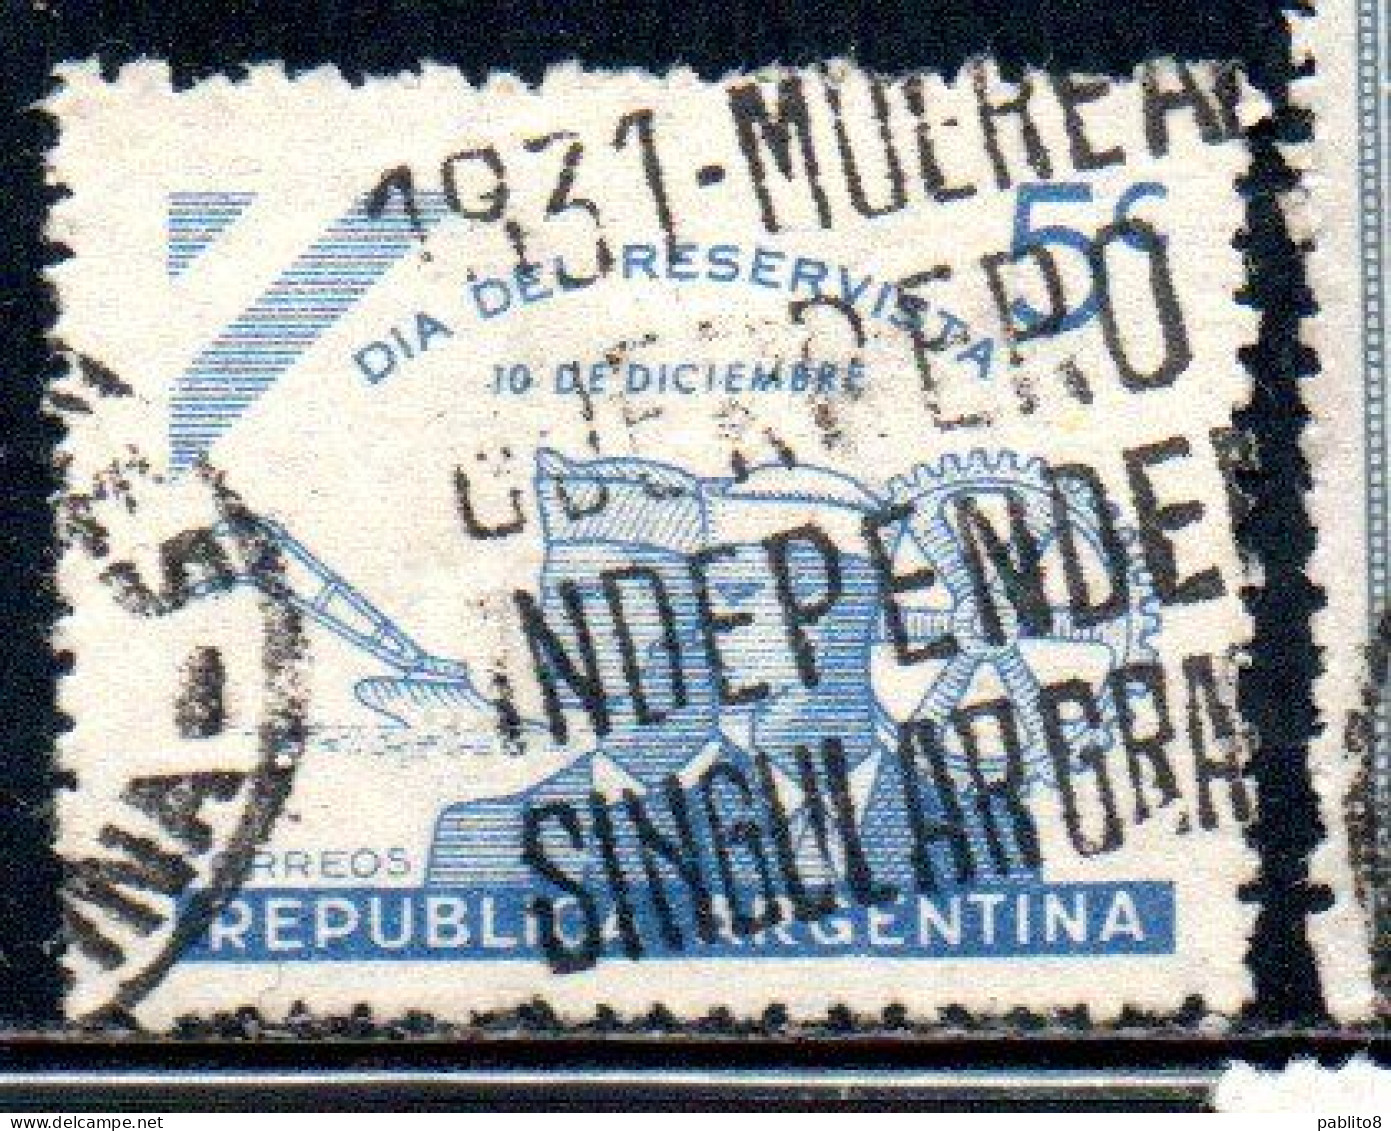 ARGENTINA 1944 DAY OF RESERVISTS 5c USED USADO OBLITERE' - Oblitérés